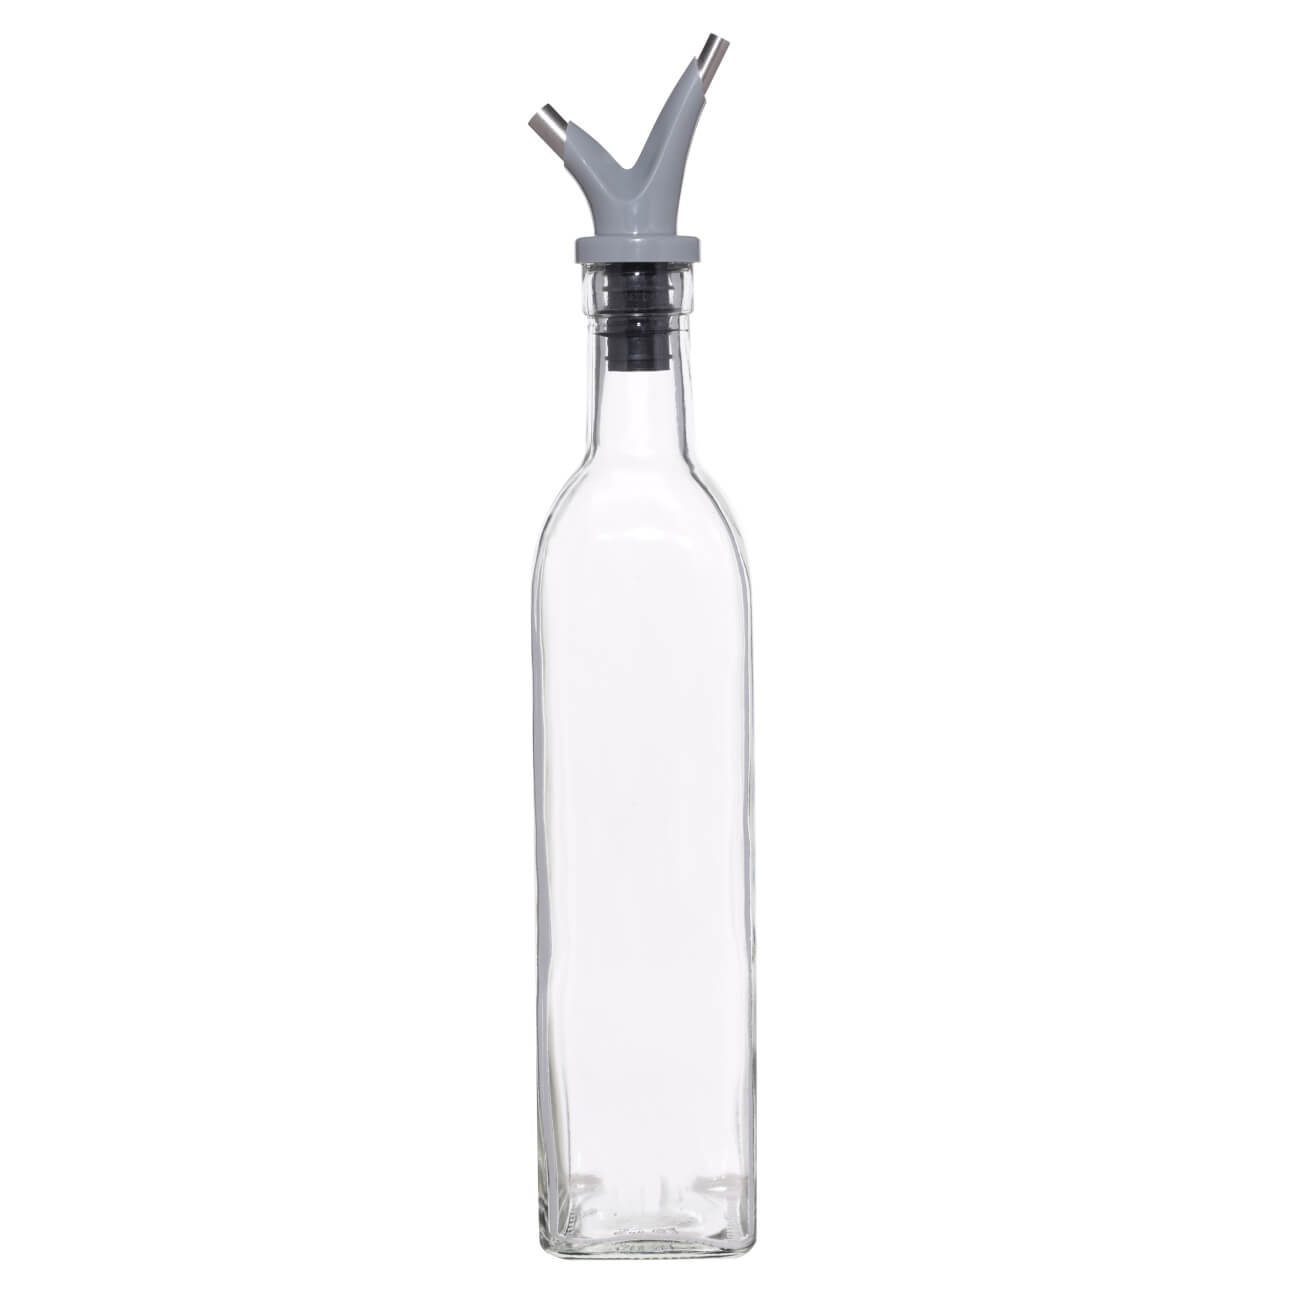 Бутылка для масла или уксуса, 500 мл, с двойным дозатором, стекло/пластик, Assist бутылка n3010500 0 6 л